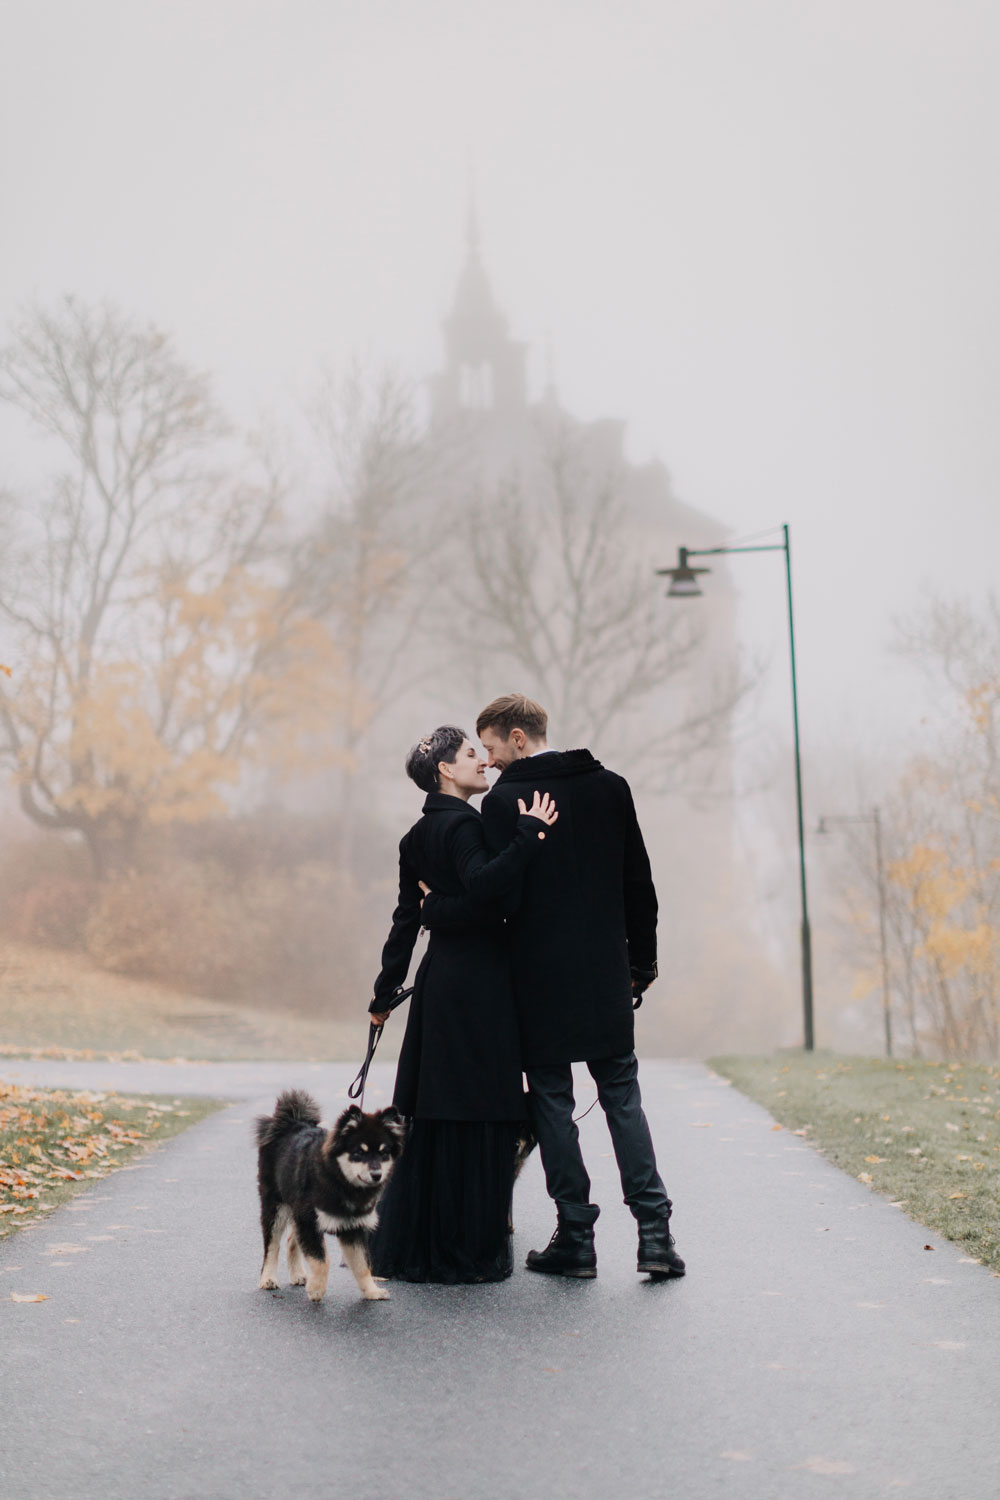 misty brollopsfotograf wikslott stockholm uppsala kerrouphotography - Recent weddings